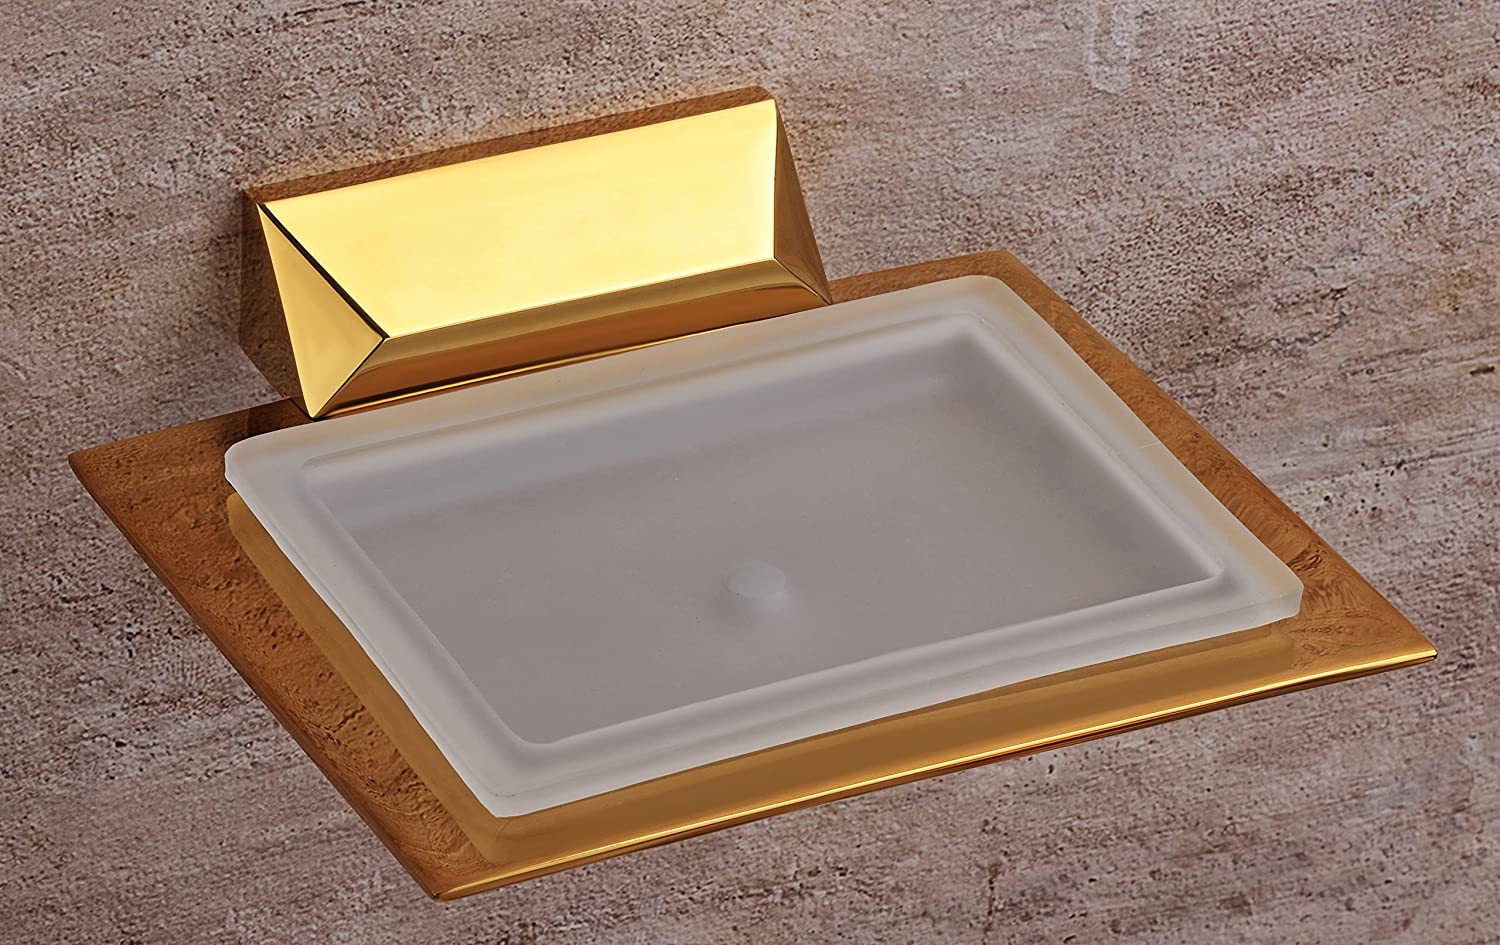 Aquieen Wall Mounted GlaSS Soap Dish (Gold)